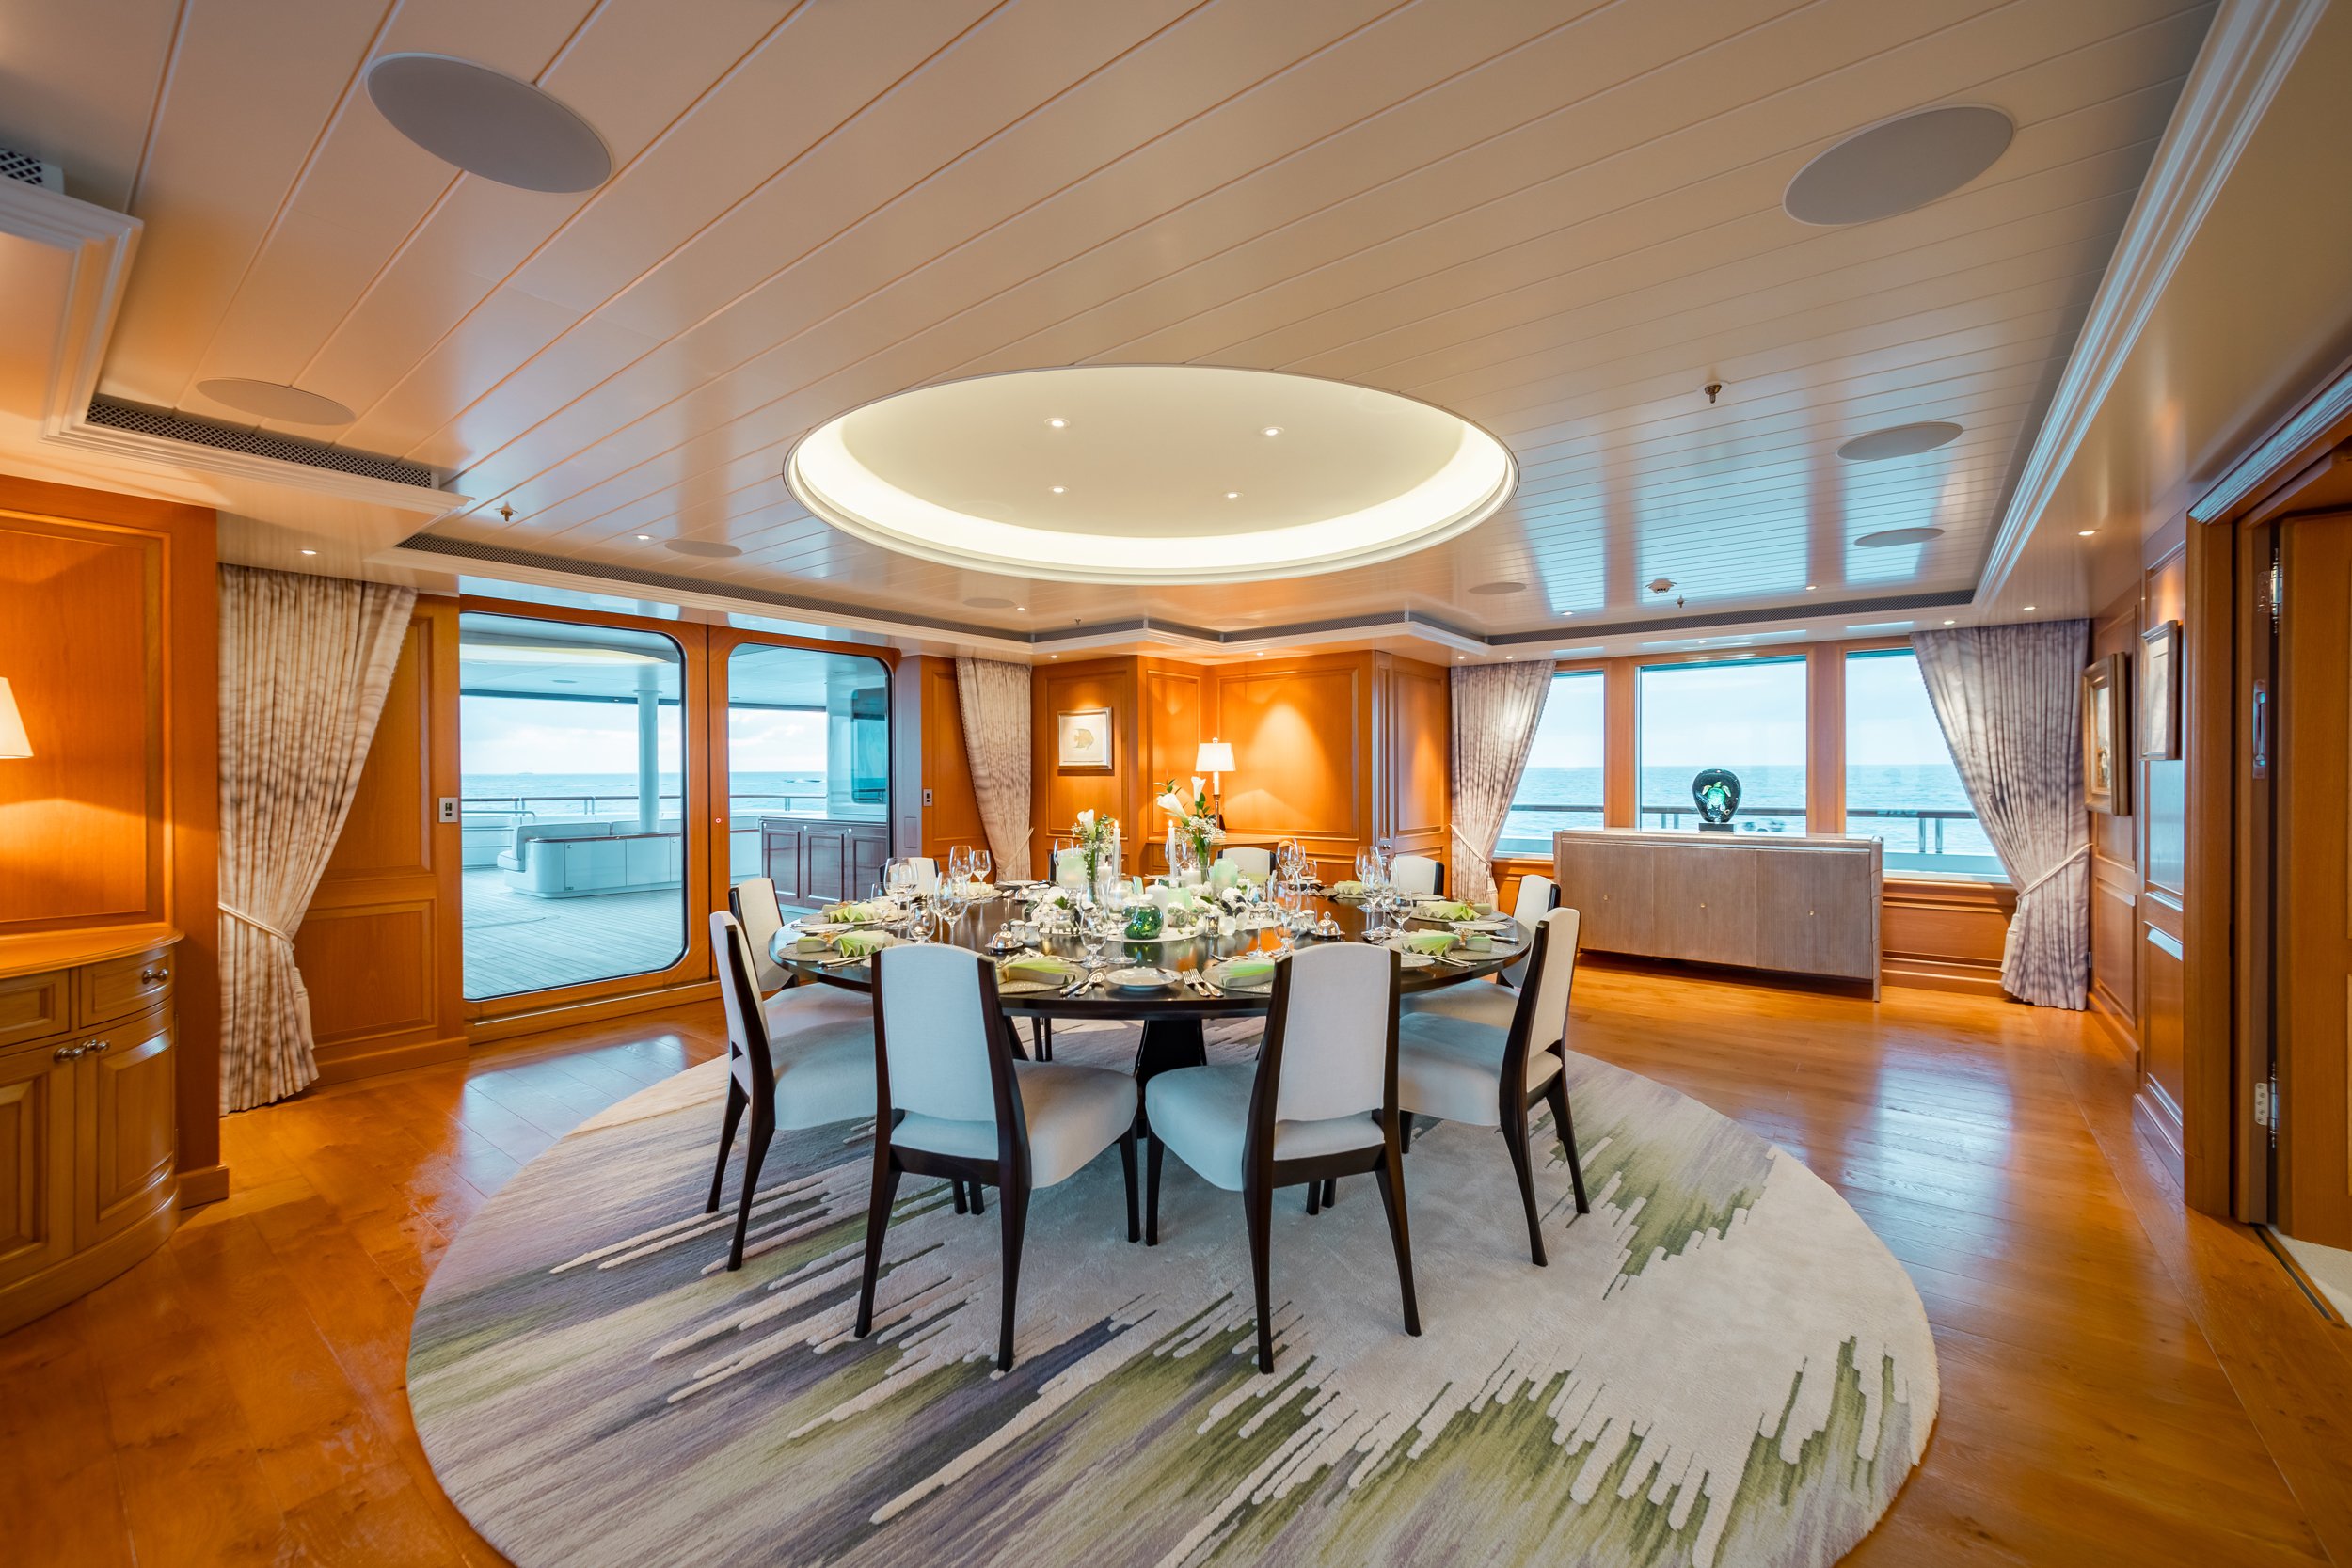 Lurssen yacht HUNTRESS interior (Main salon)